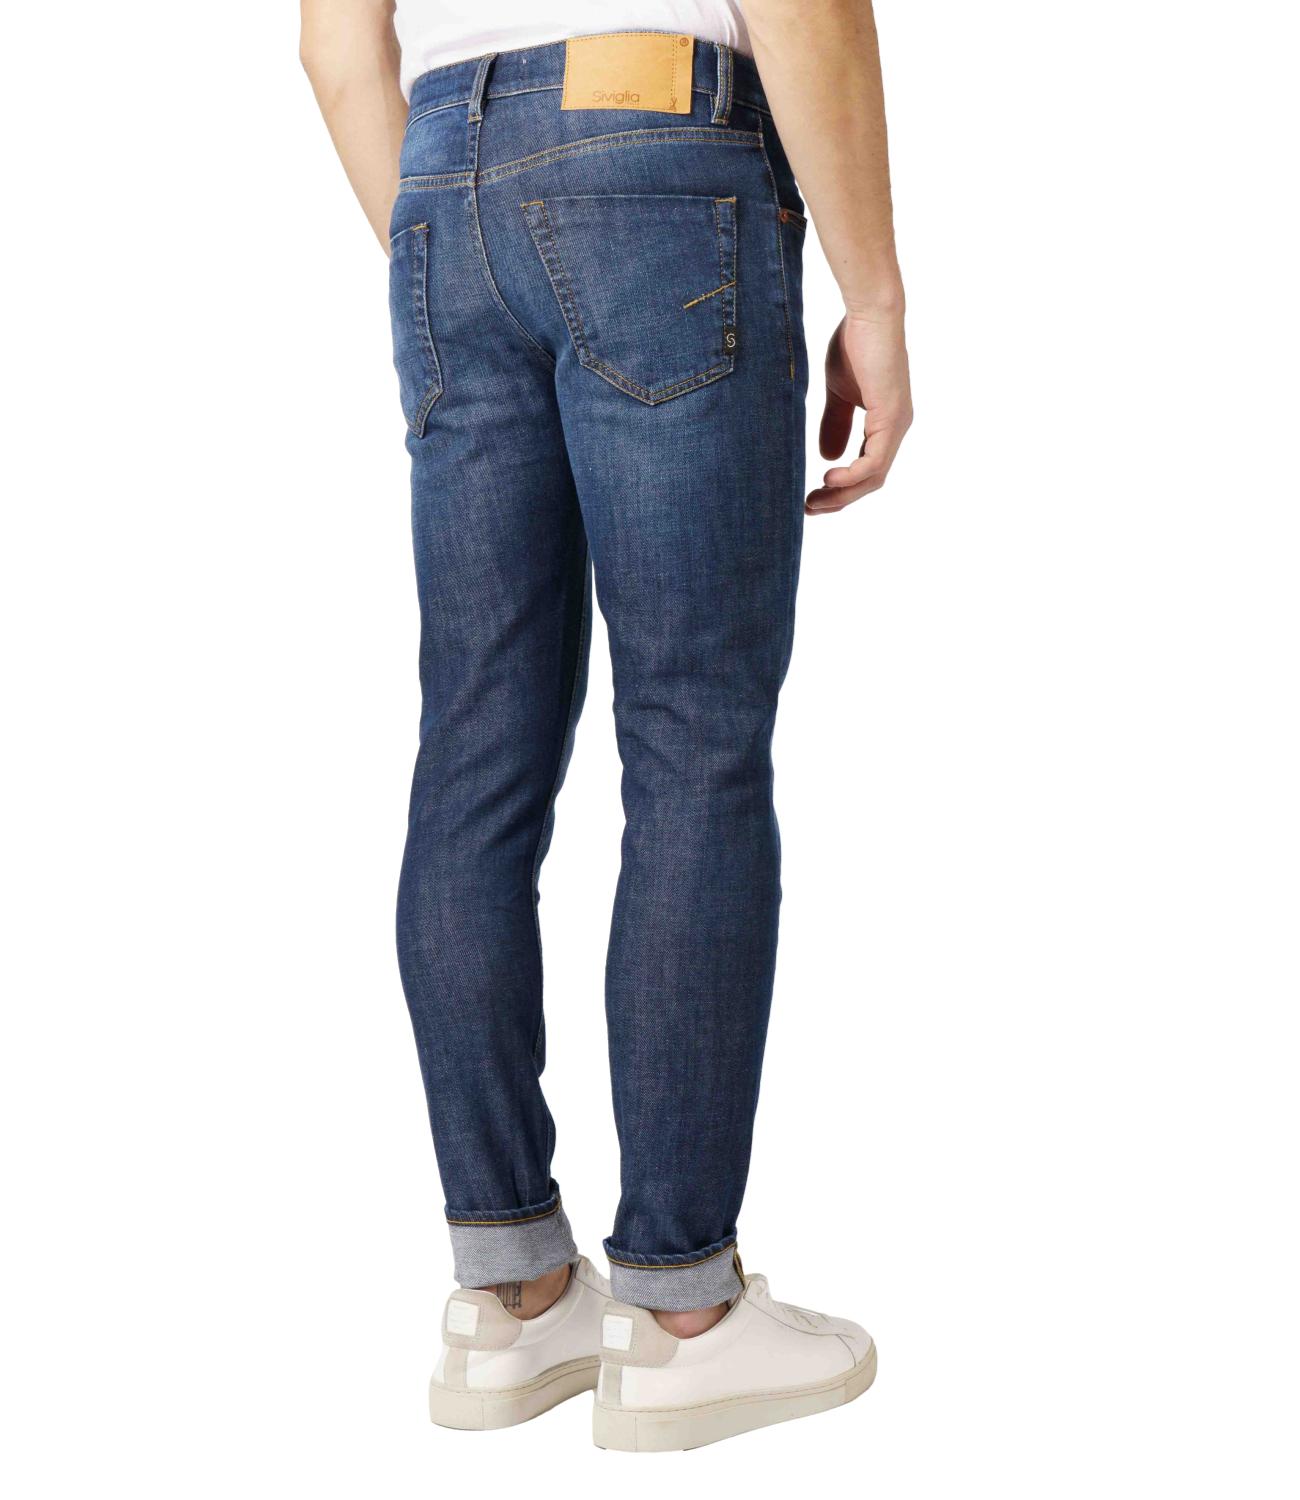 Siviglia jeans denim medio leggermente slavato